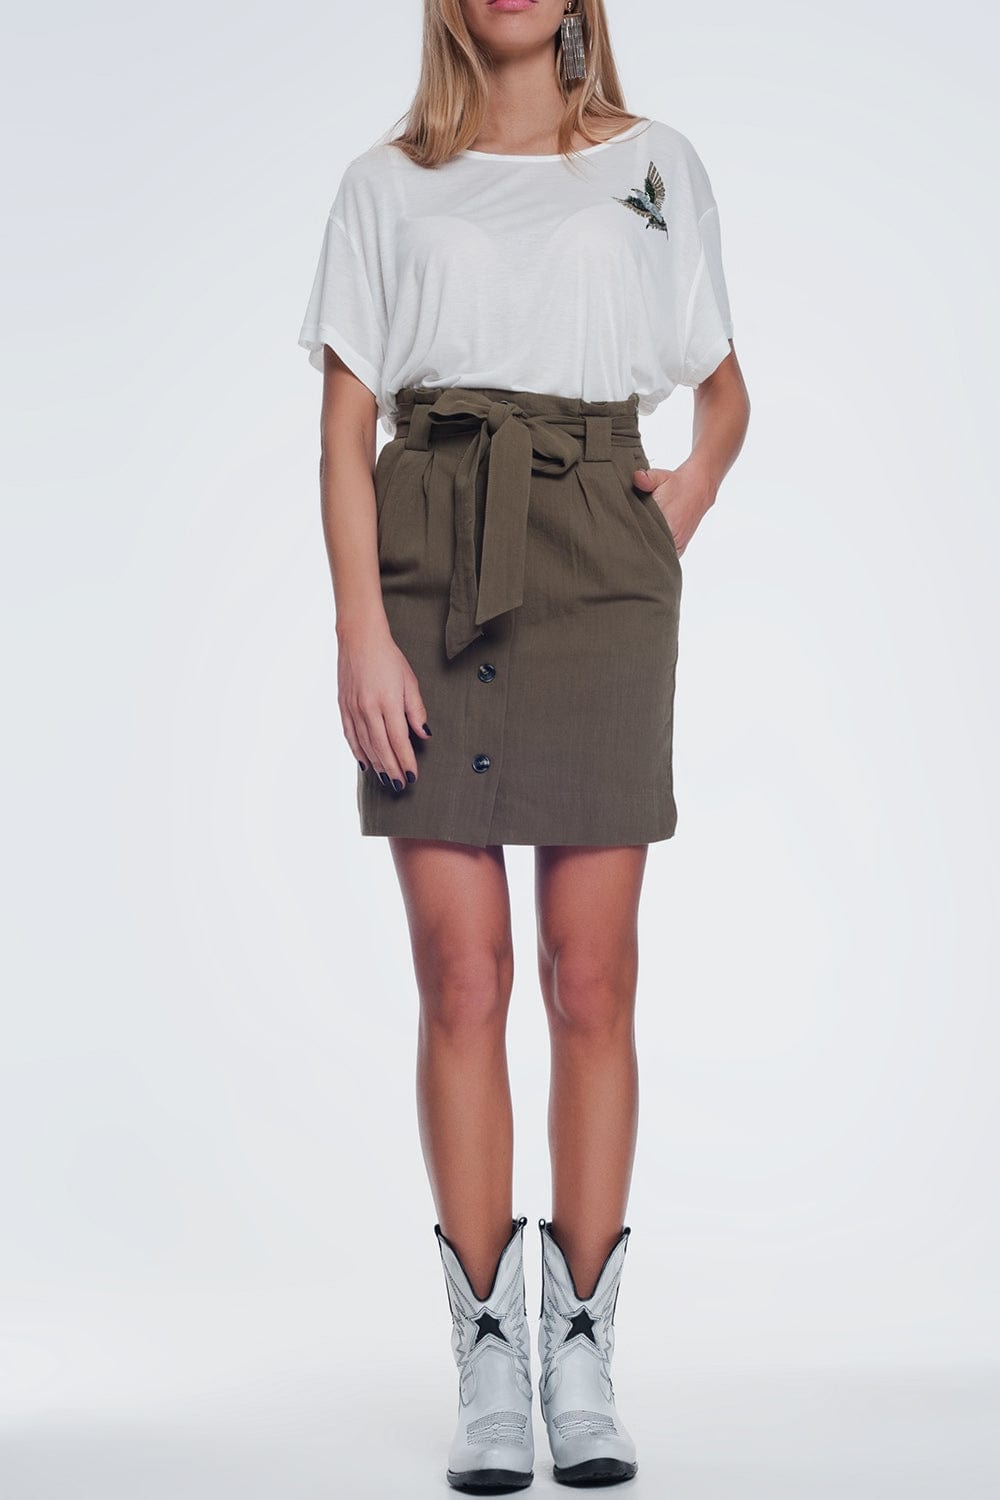 Q2 Women's Skirt Mini Khaki Skirt with Front Buttons